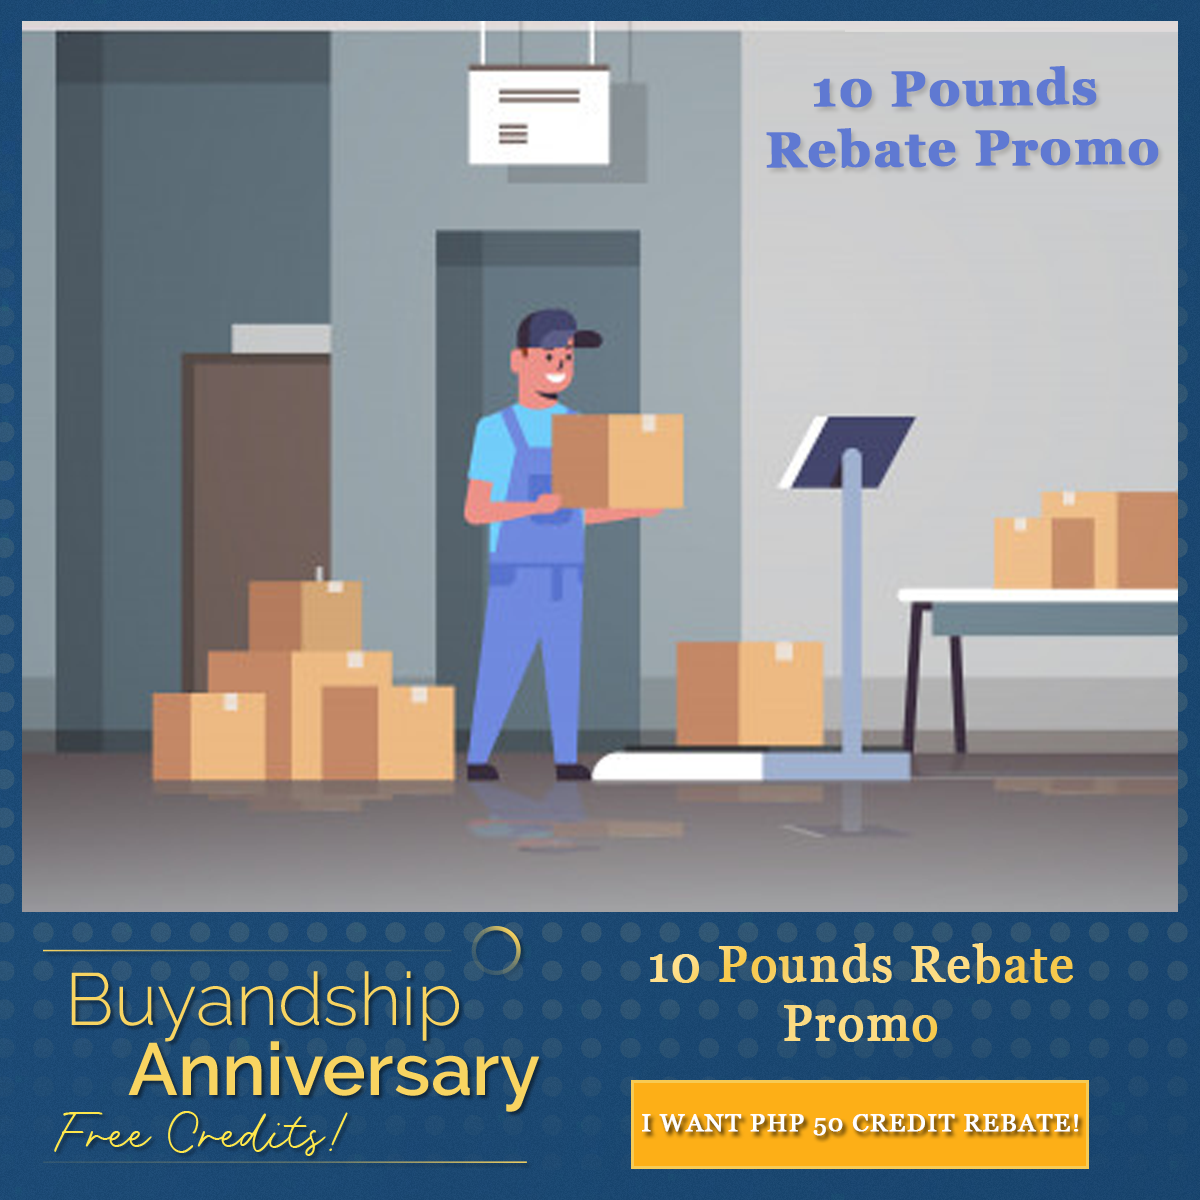 buyandship-anniversary-10-pounds-rebate-promo-buyandship-philippines